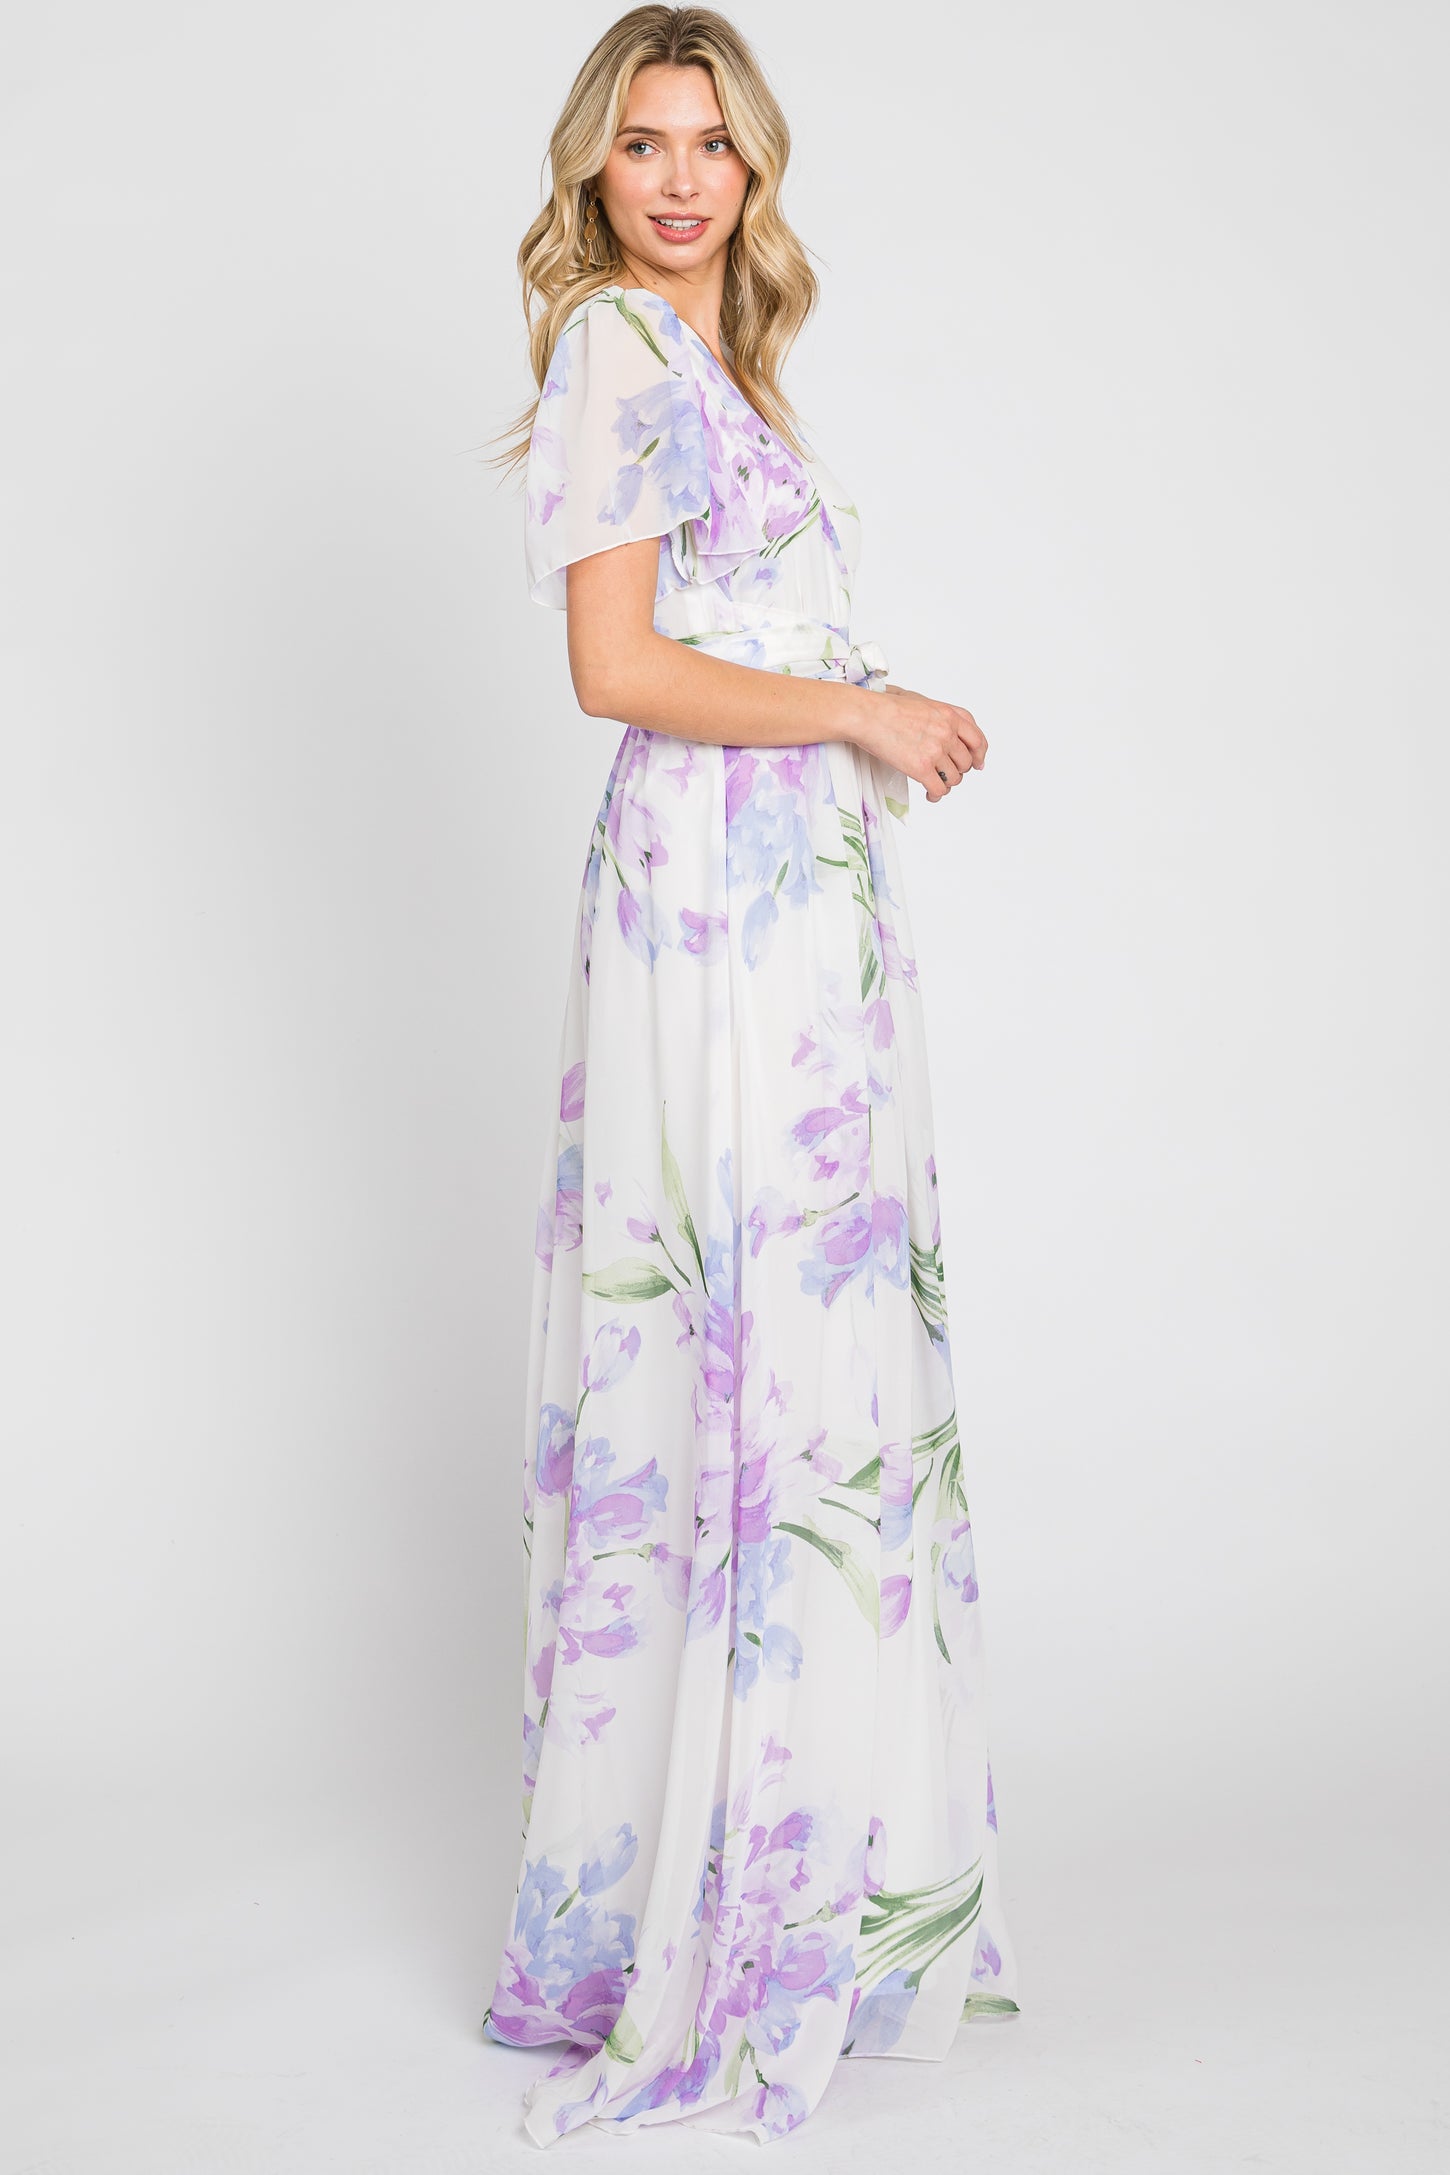 Lavender Tulip Floral Chiffon Wrap Front Short Sleeve Maxi Dress